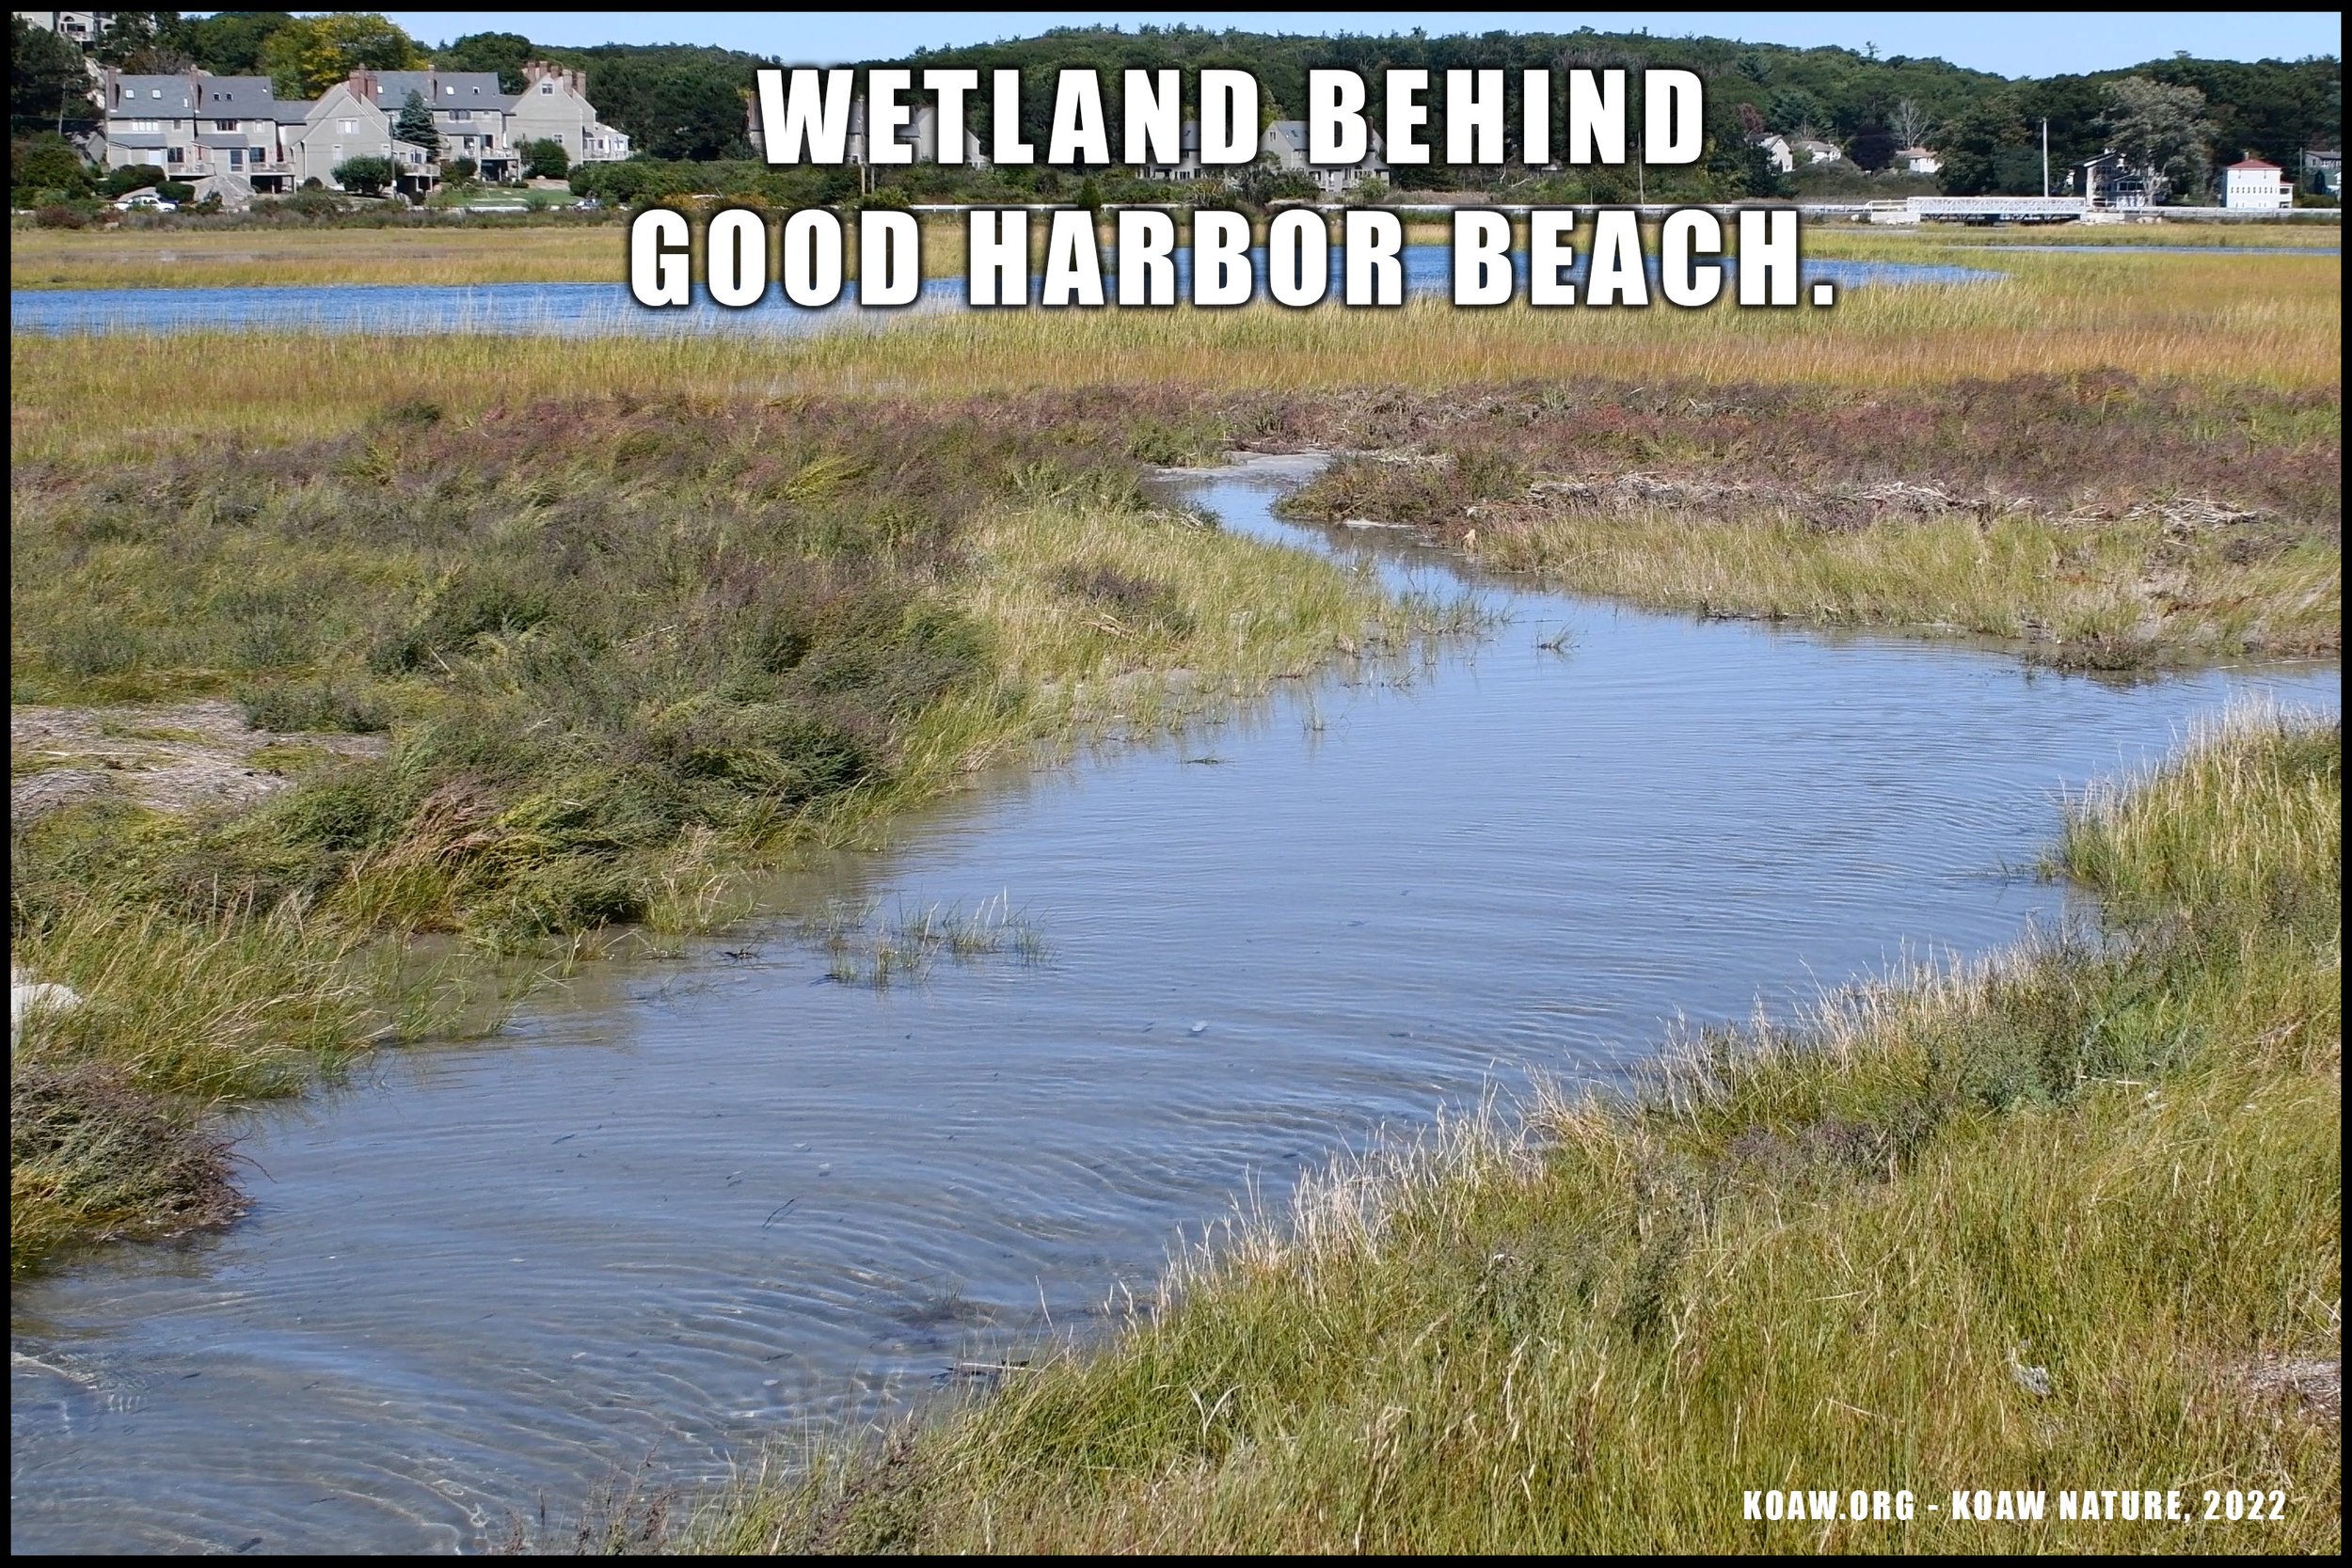 Wetland of Good Harbor Beach